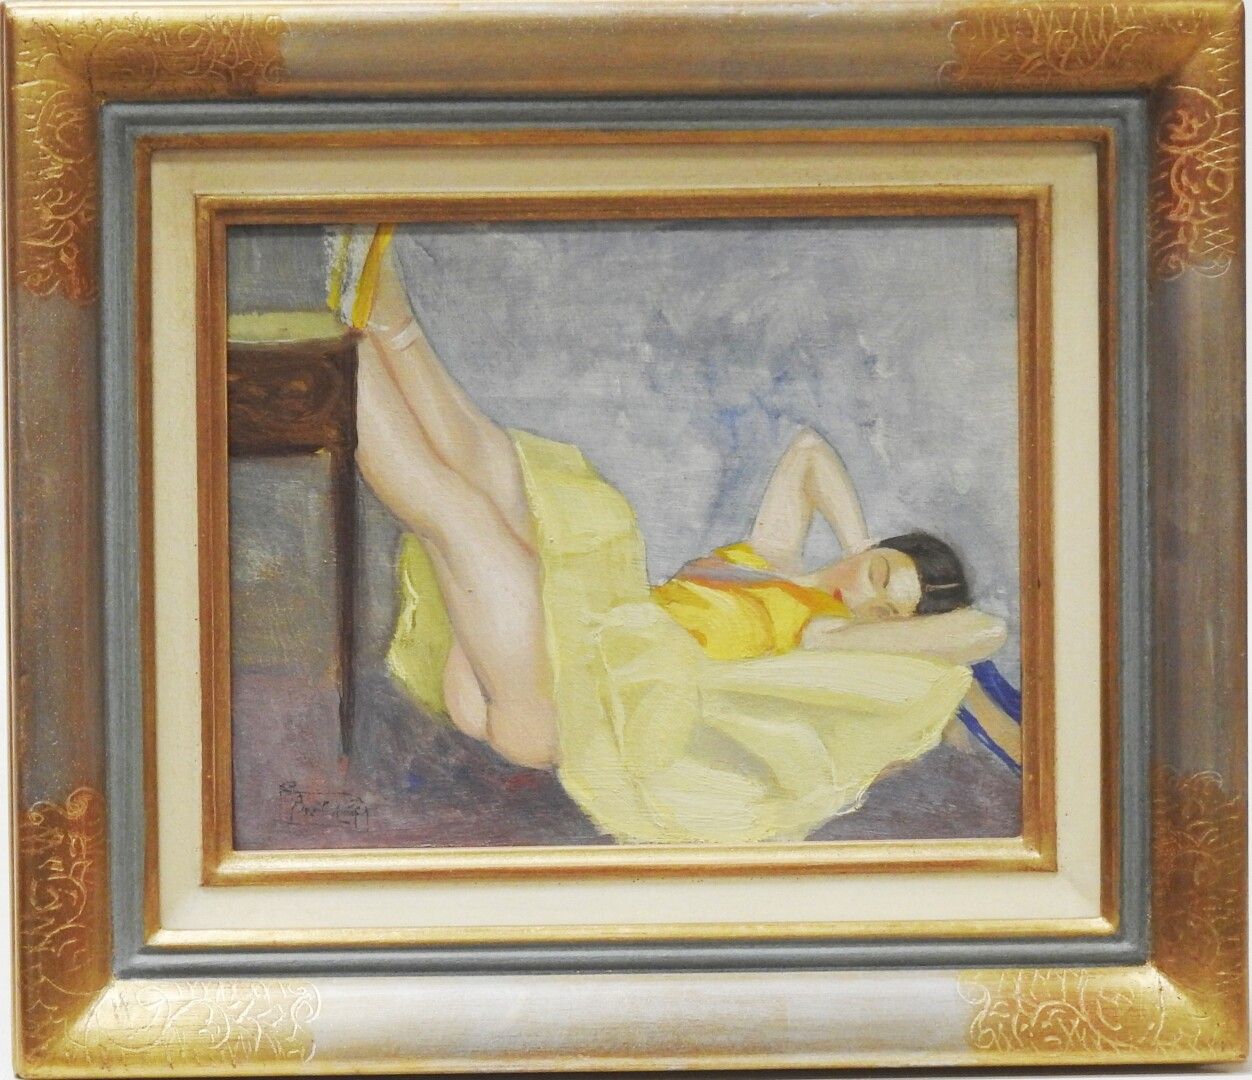 Null 阿尔伯特-布莱图-萨拉 (1885 - 1972)

芭蕾舞者的休息

纸板上的油画，左下方有签名

19 x 24 厘米